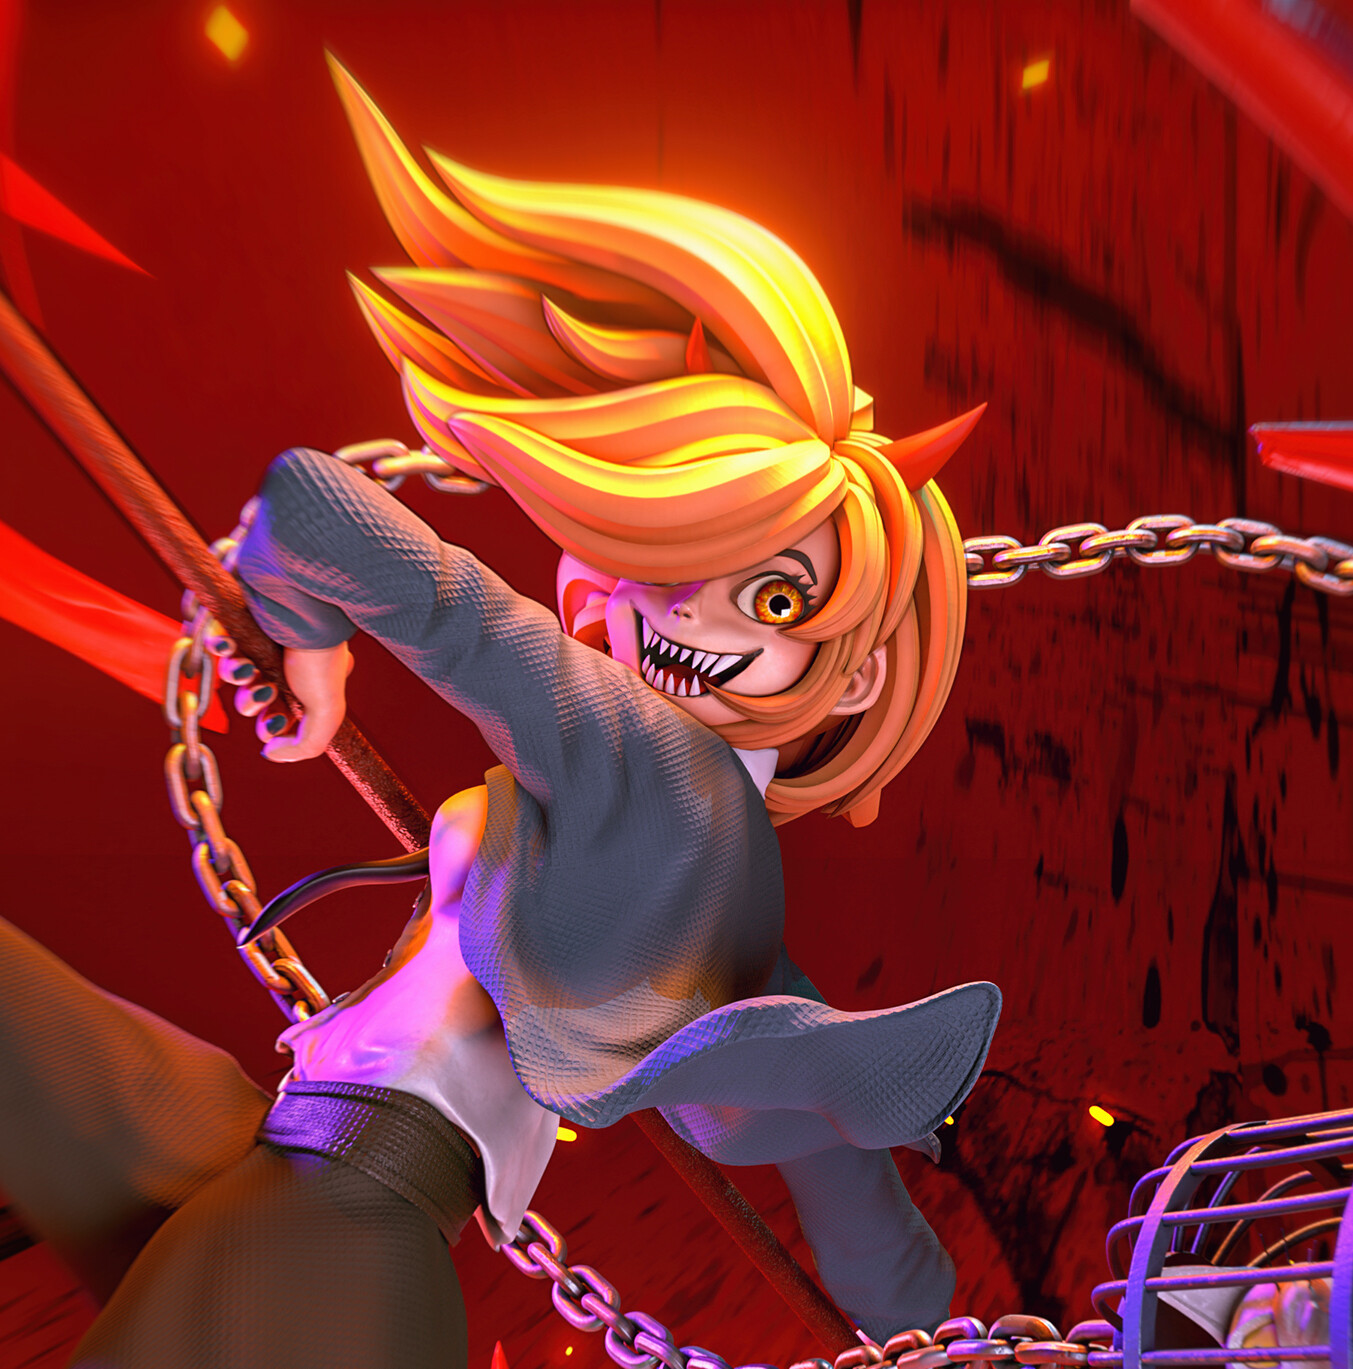 Power : ChainsawMan  Chainsaw, Manga anime girl, Character art